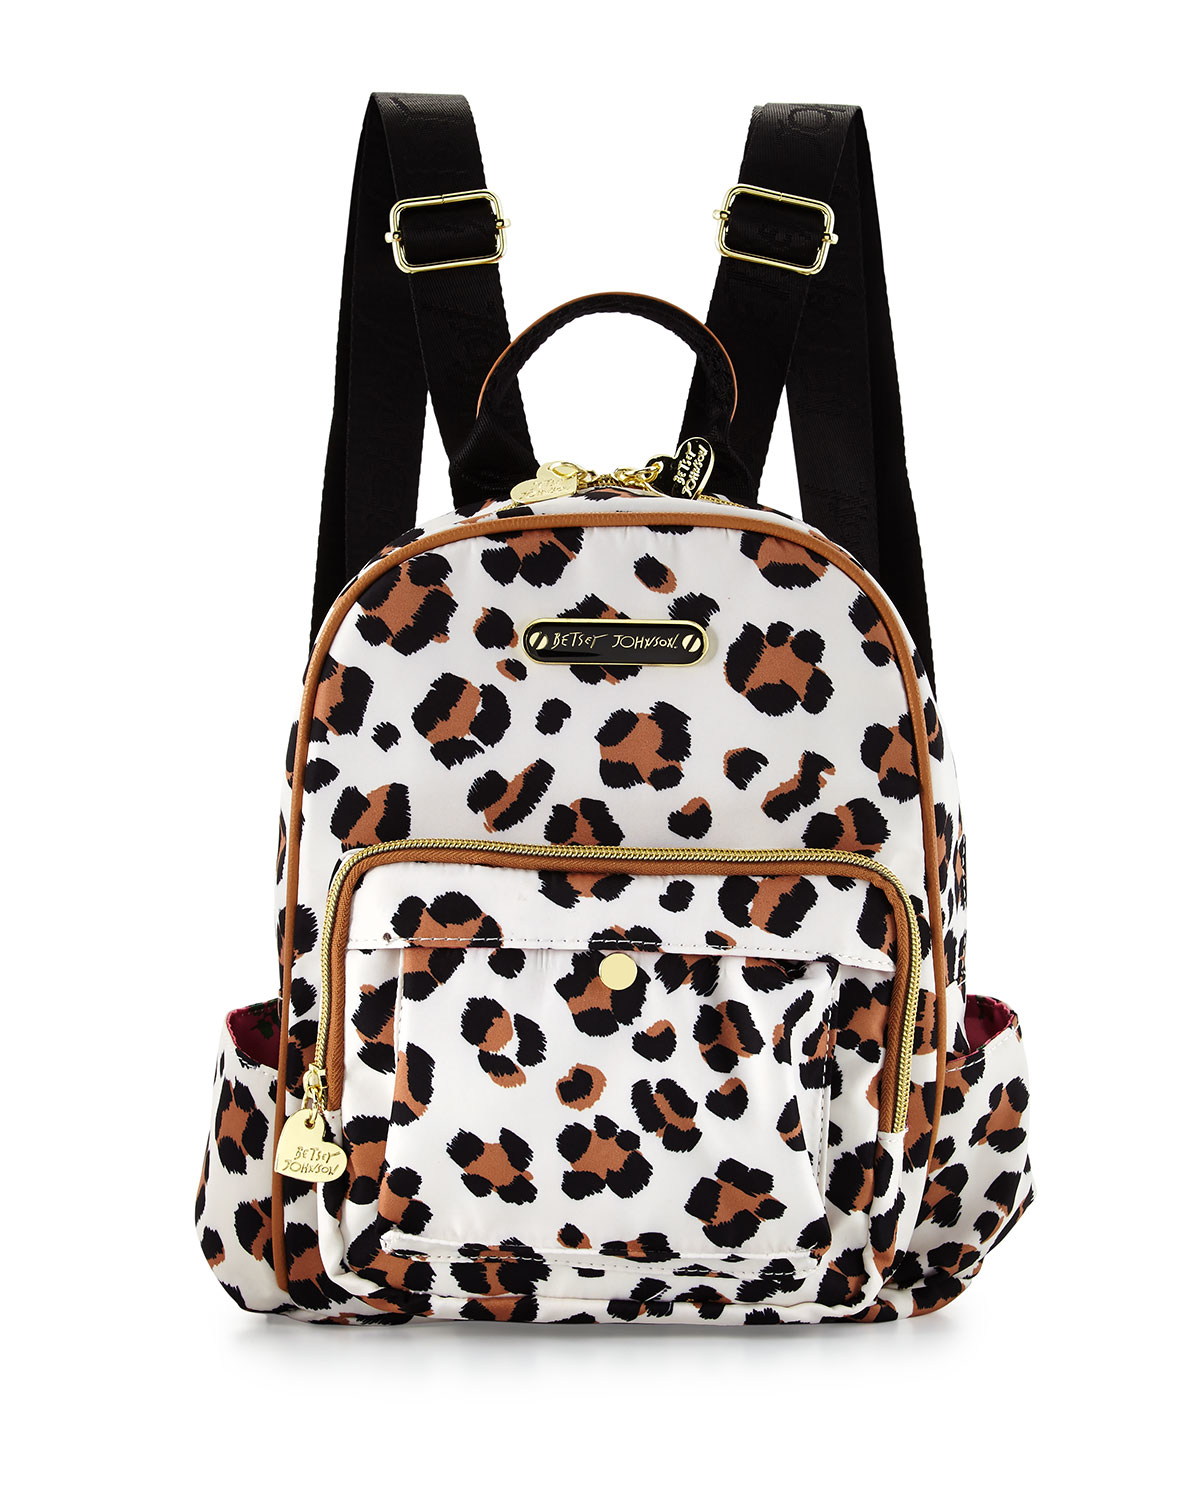 Lyst - Betsey Johnson Tgif Leopard-print Medium Backpack in Black